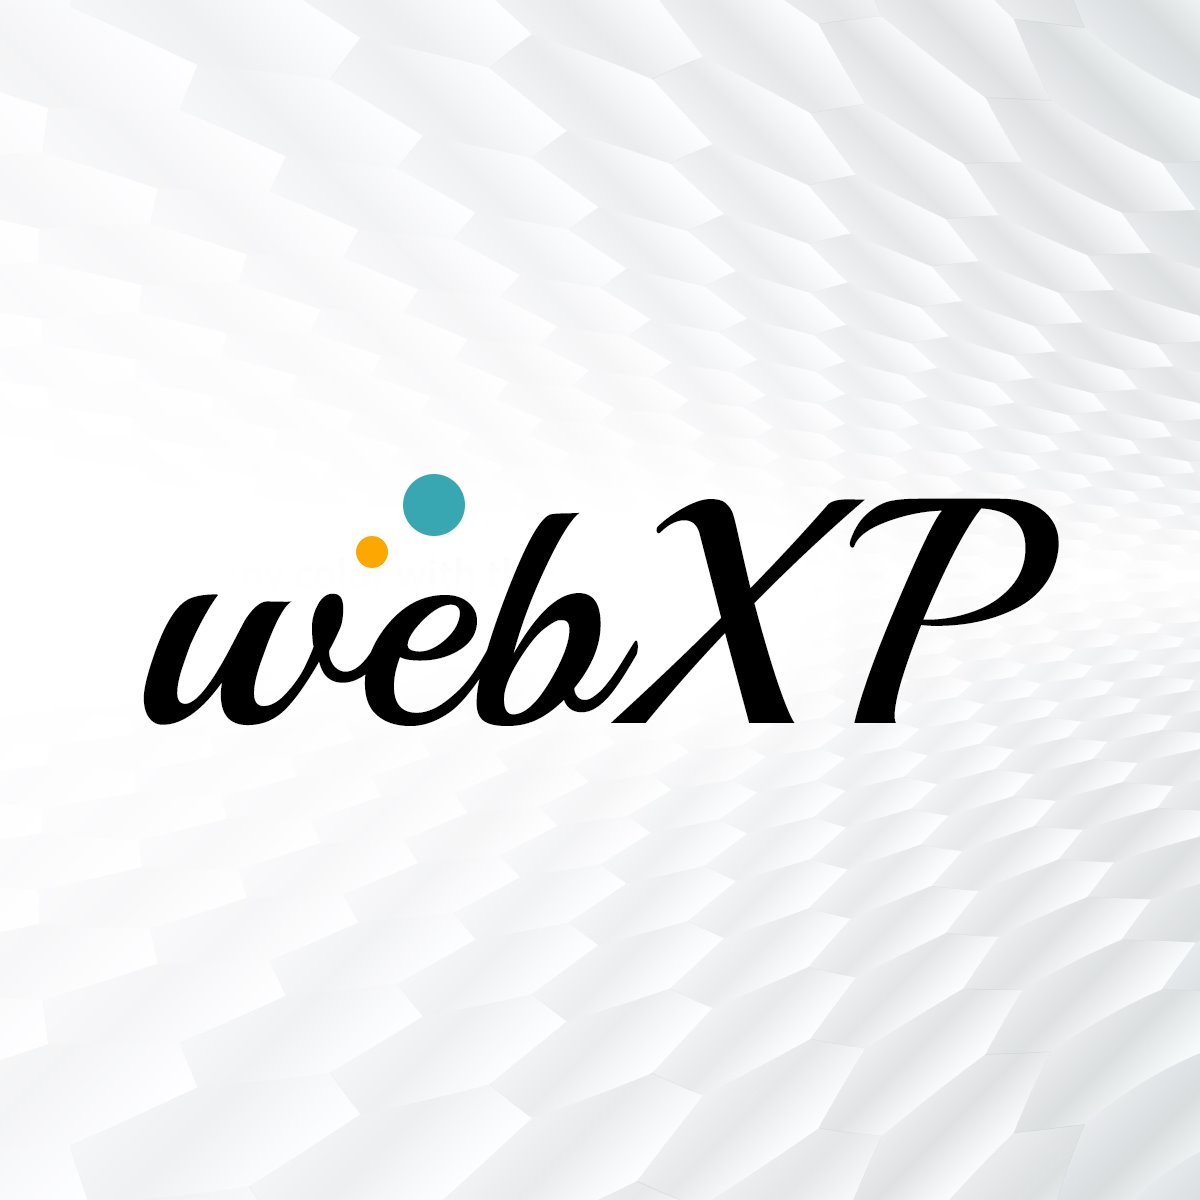 Webxp